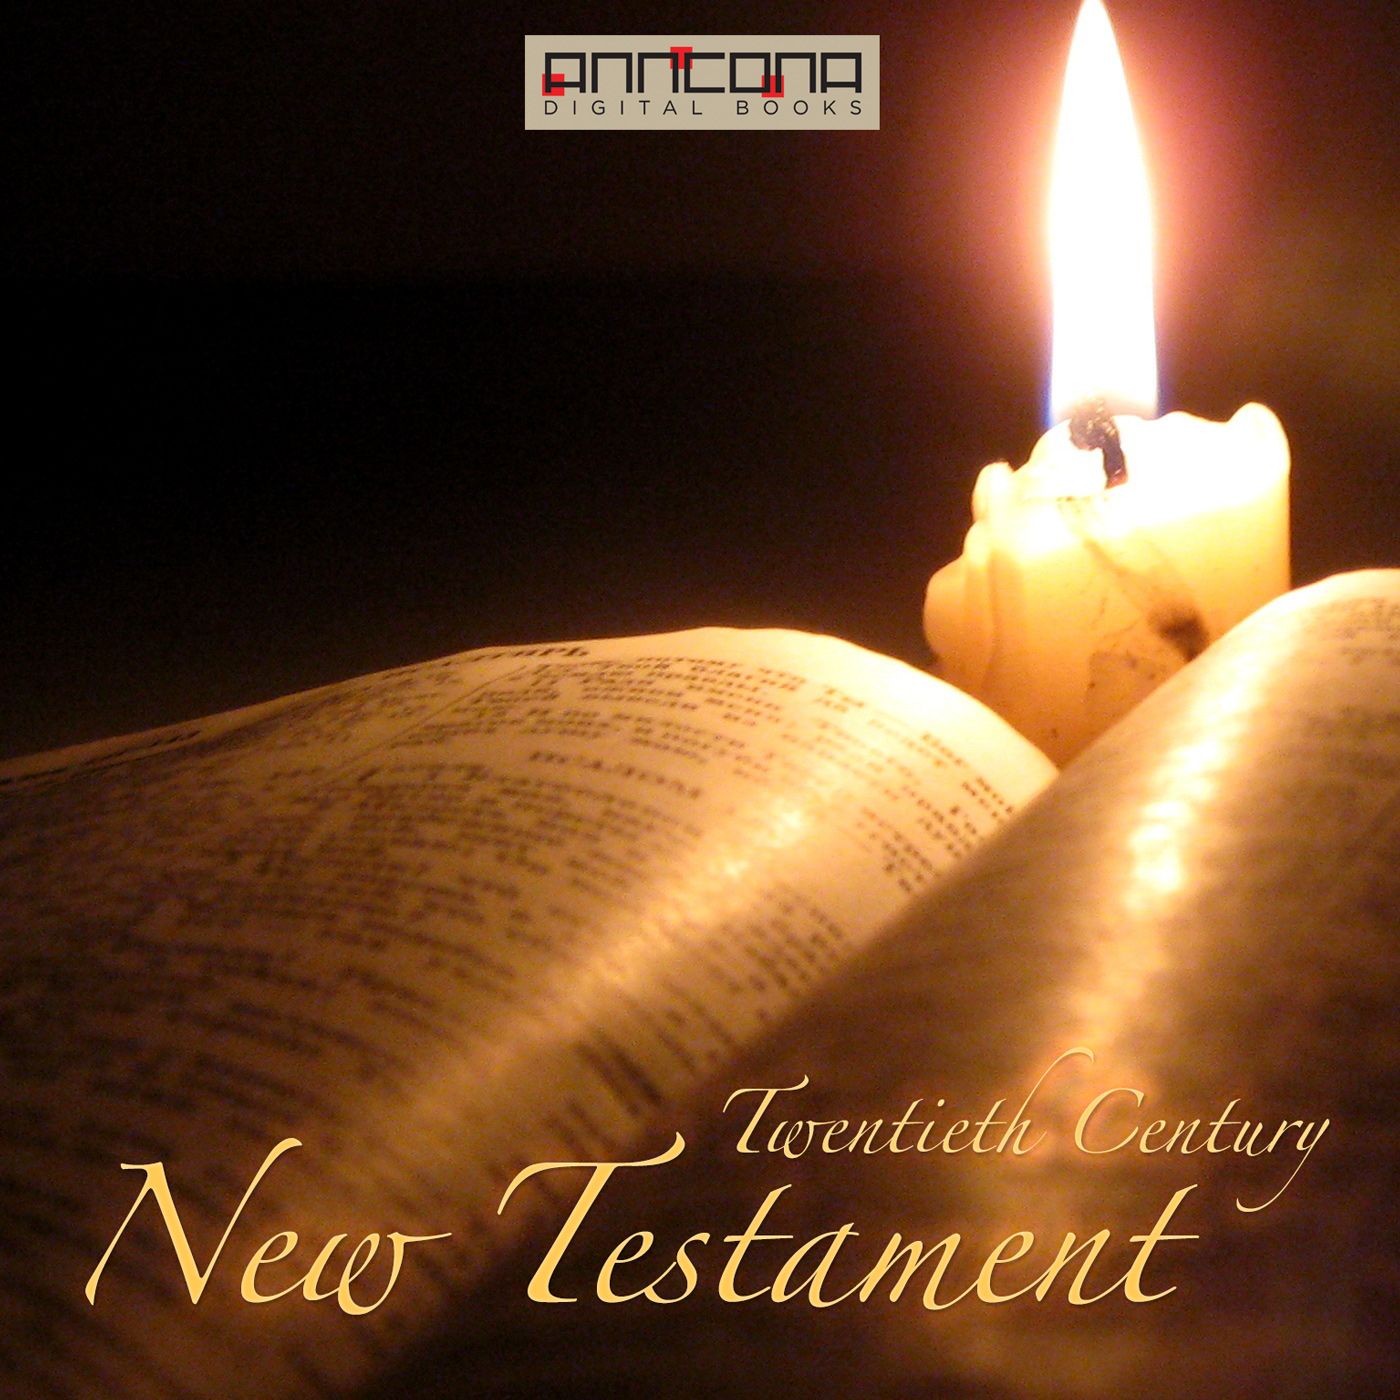 The Bible - 20th Century New Testament, lydbog af Fenton John Anthony Hort, Brooke Foss, Westcott